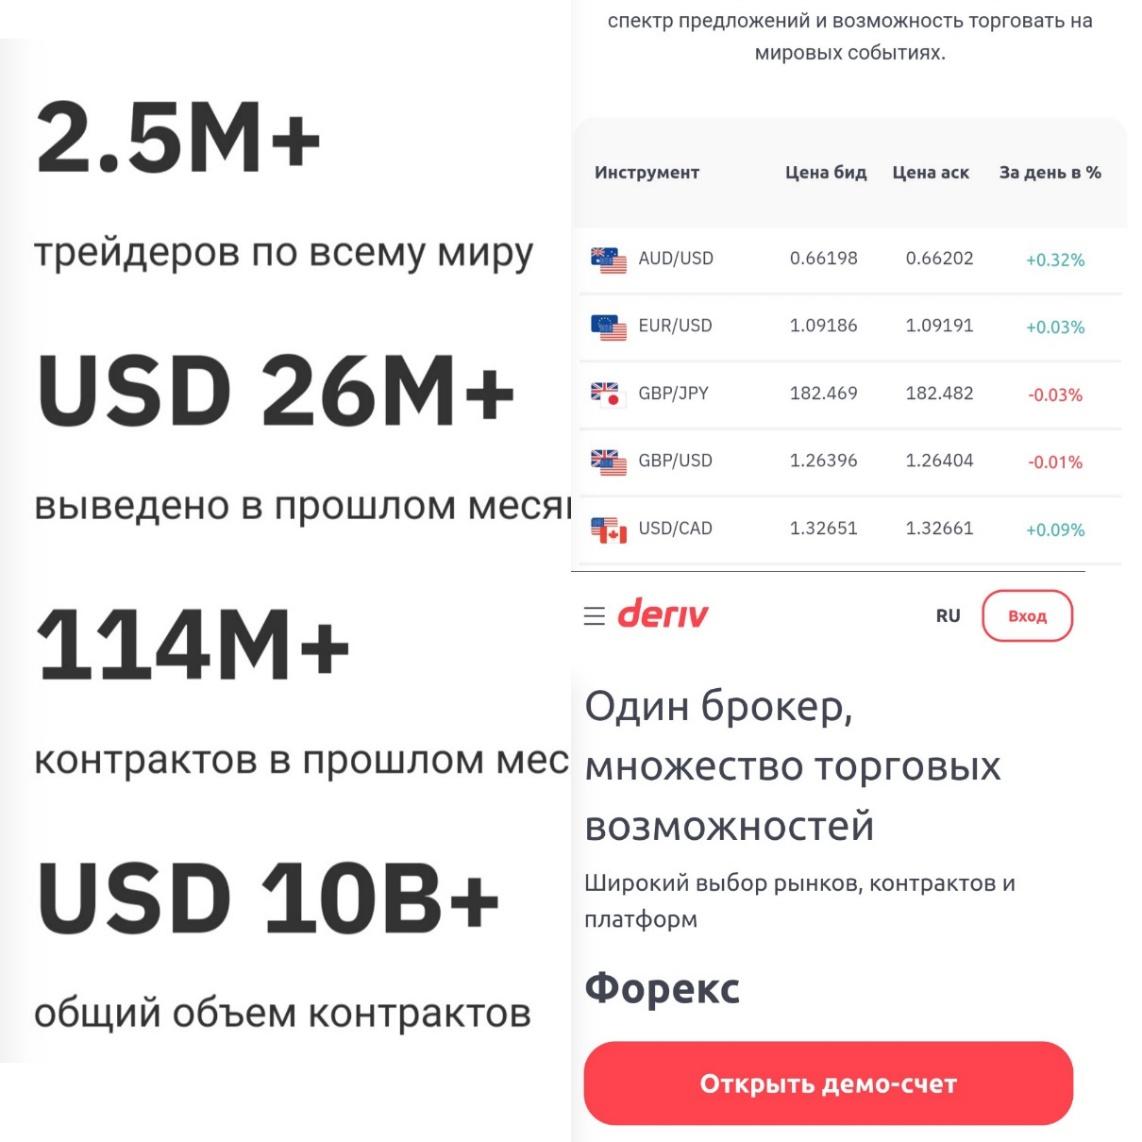 Статистика брокерской компании Deriv